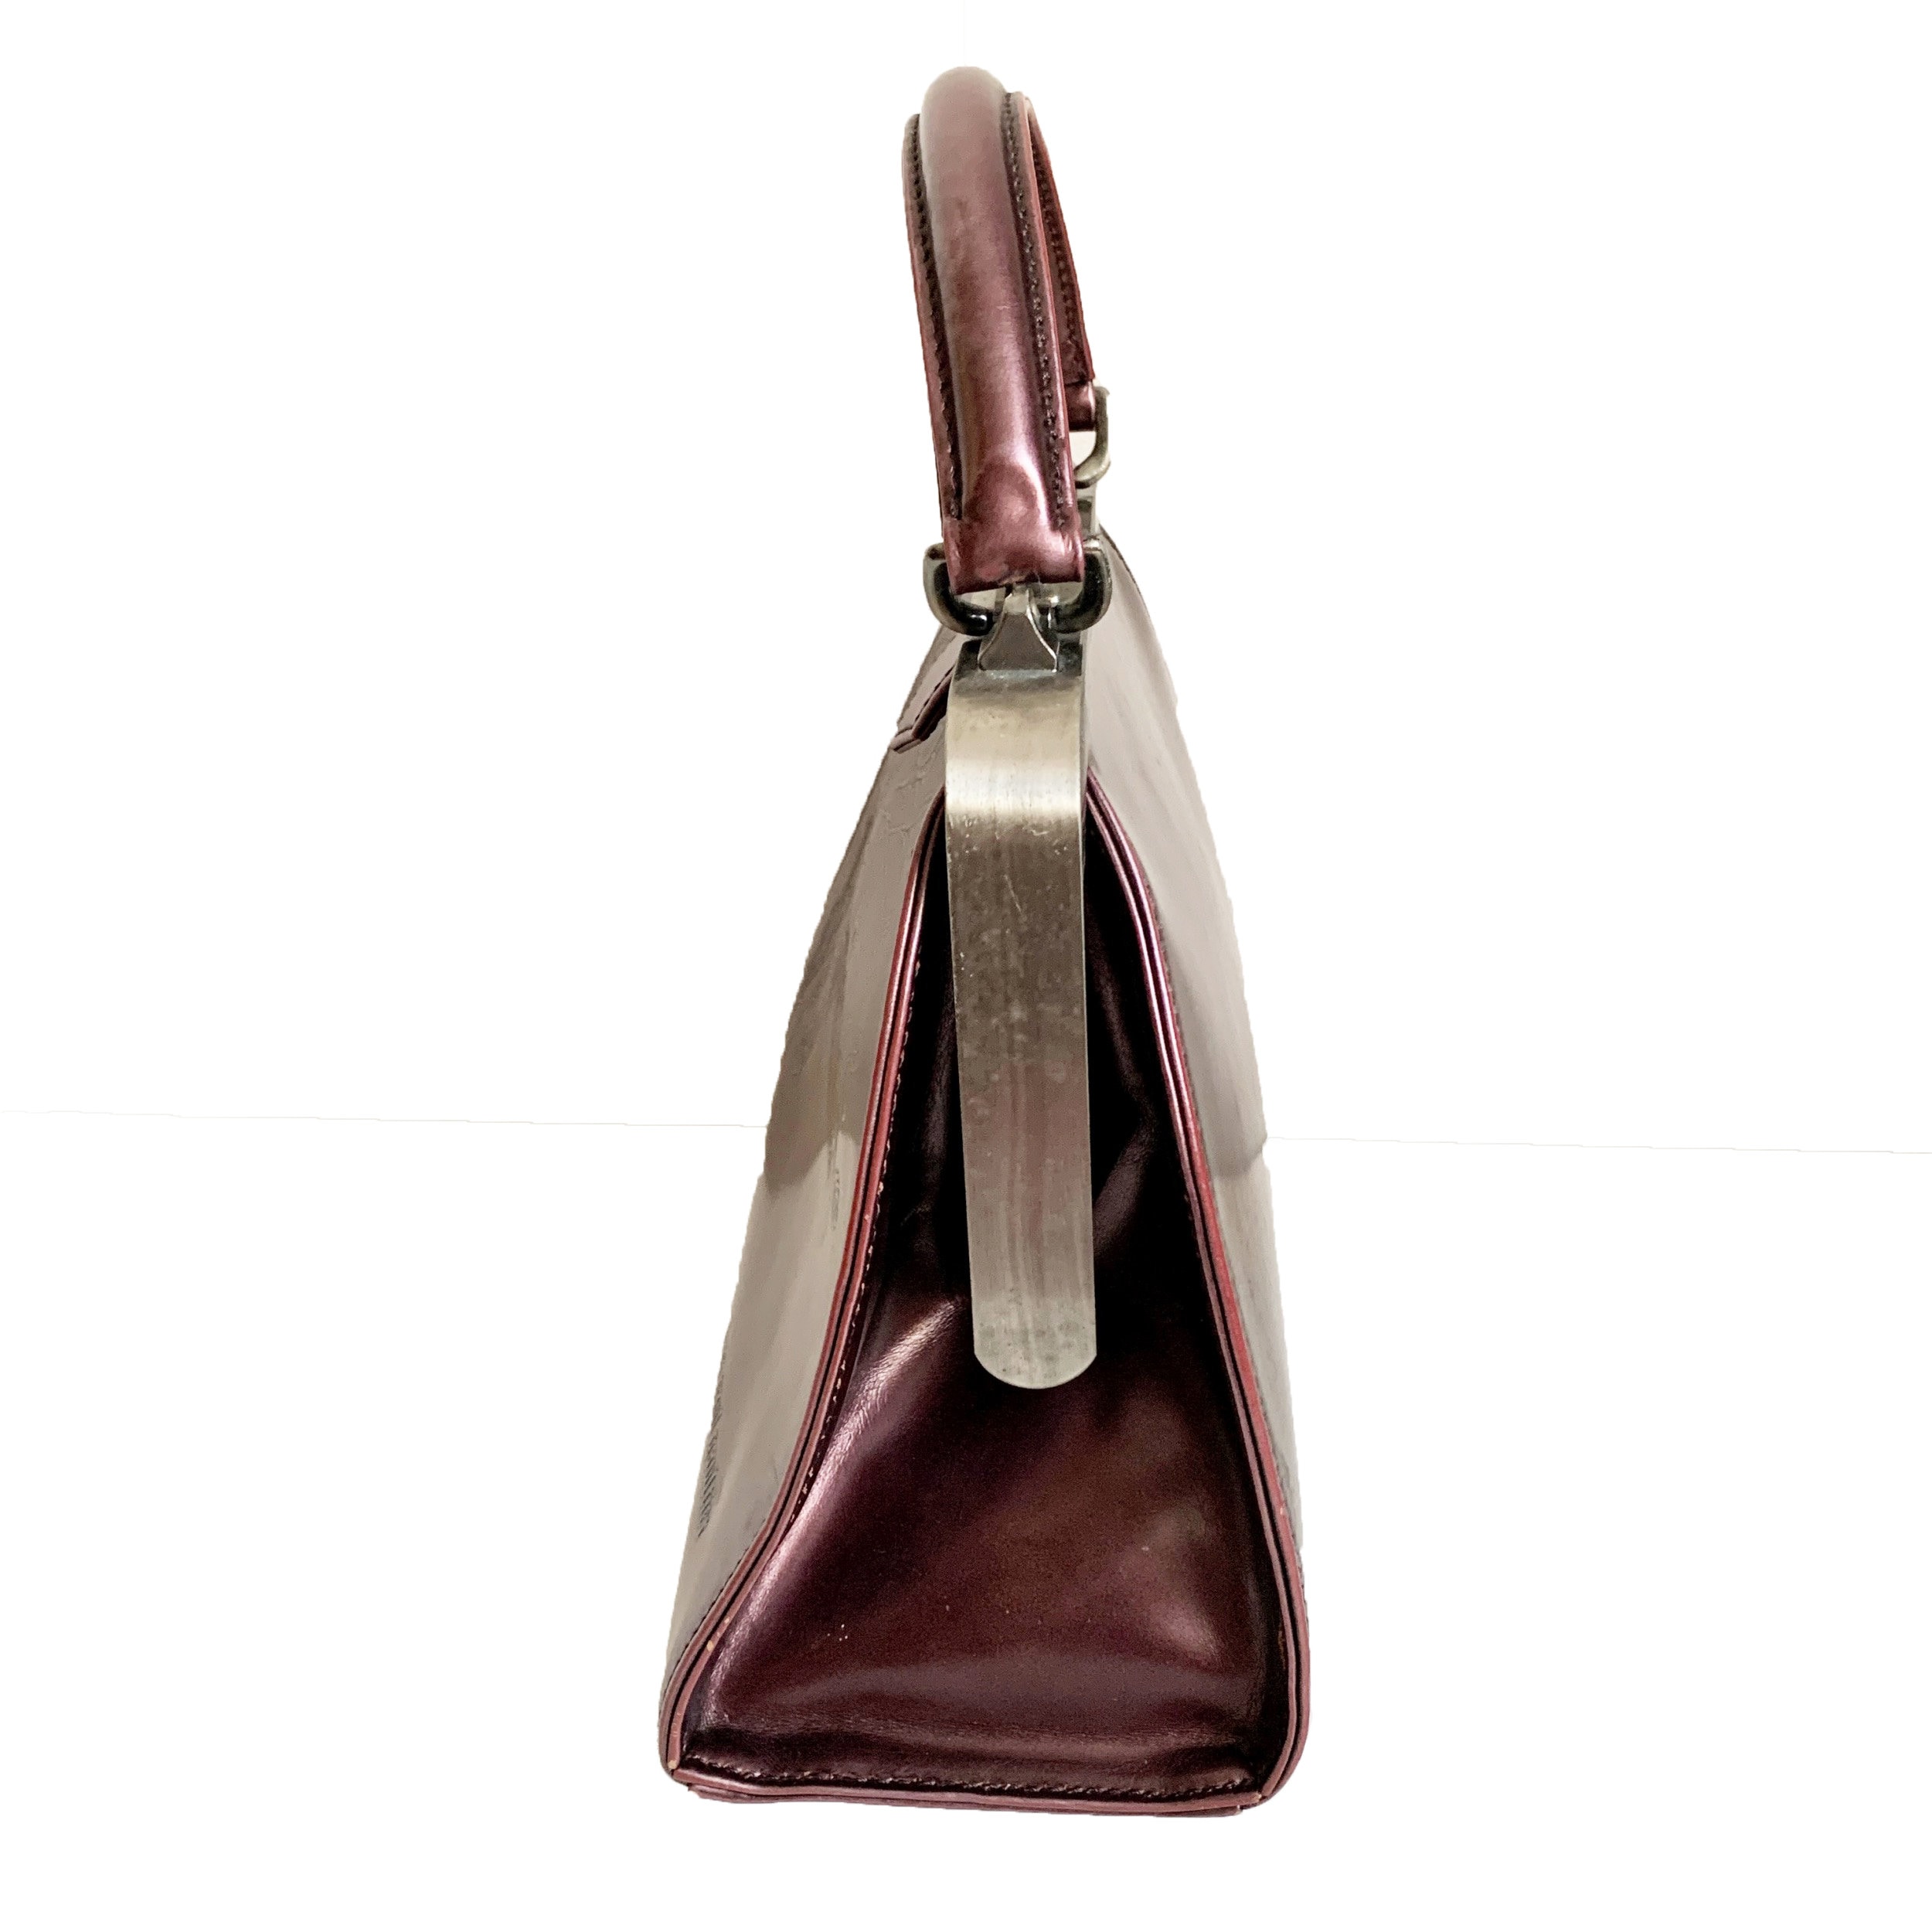 The Best Hermès Bags from Jean-Paul Gaultier, Handbags & Accessories